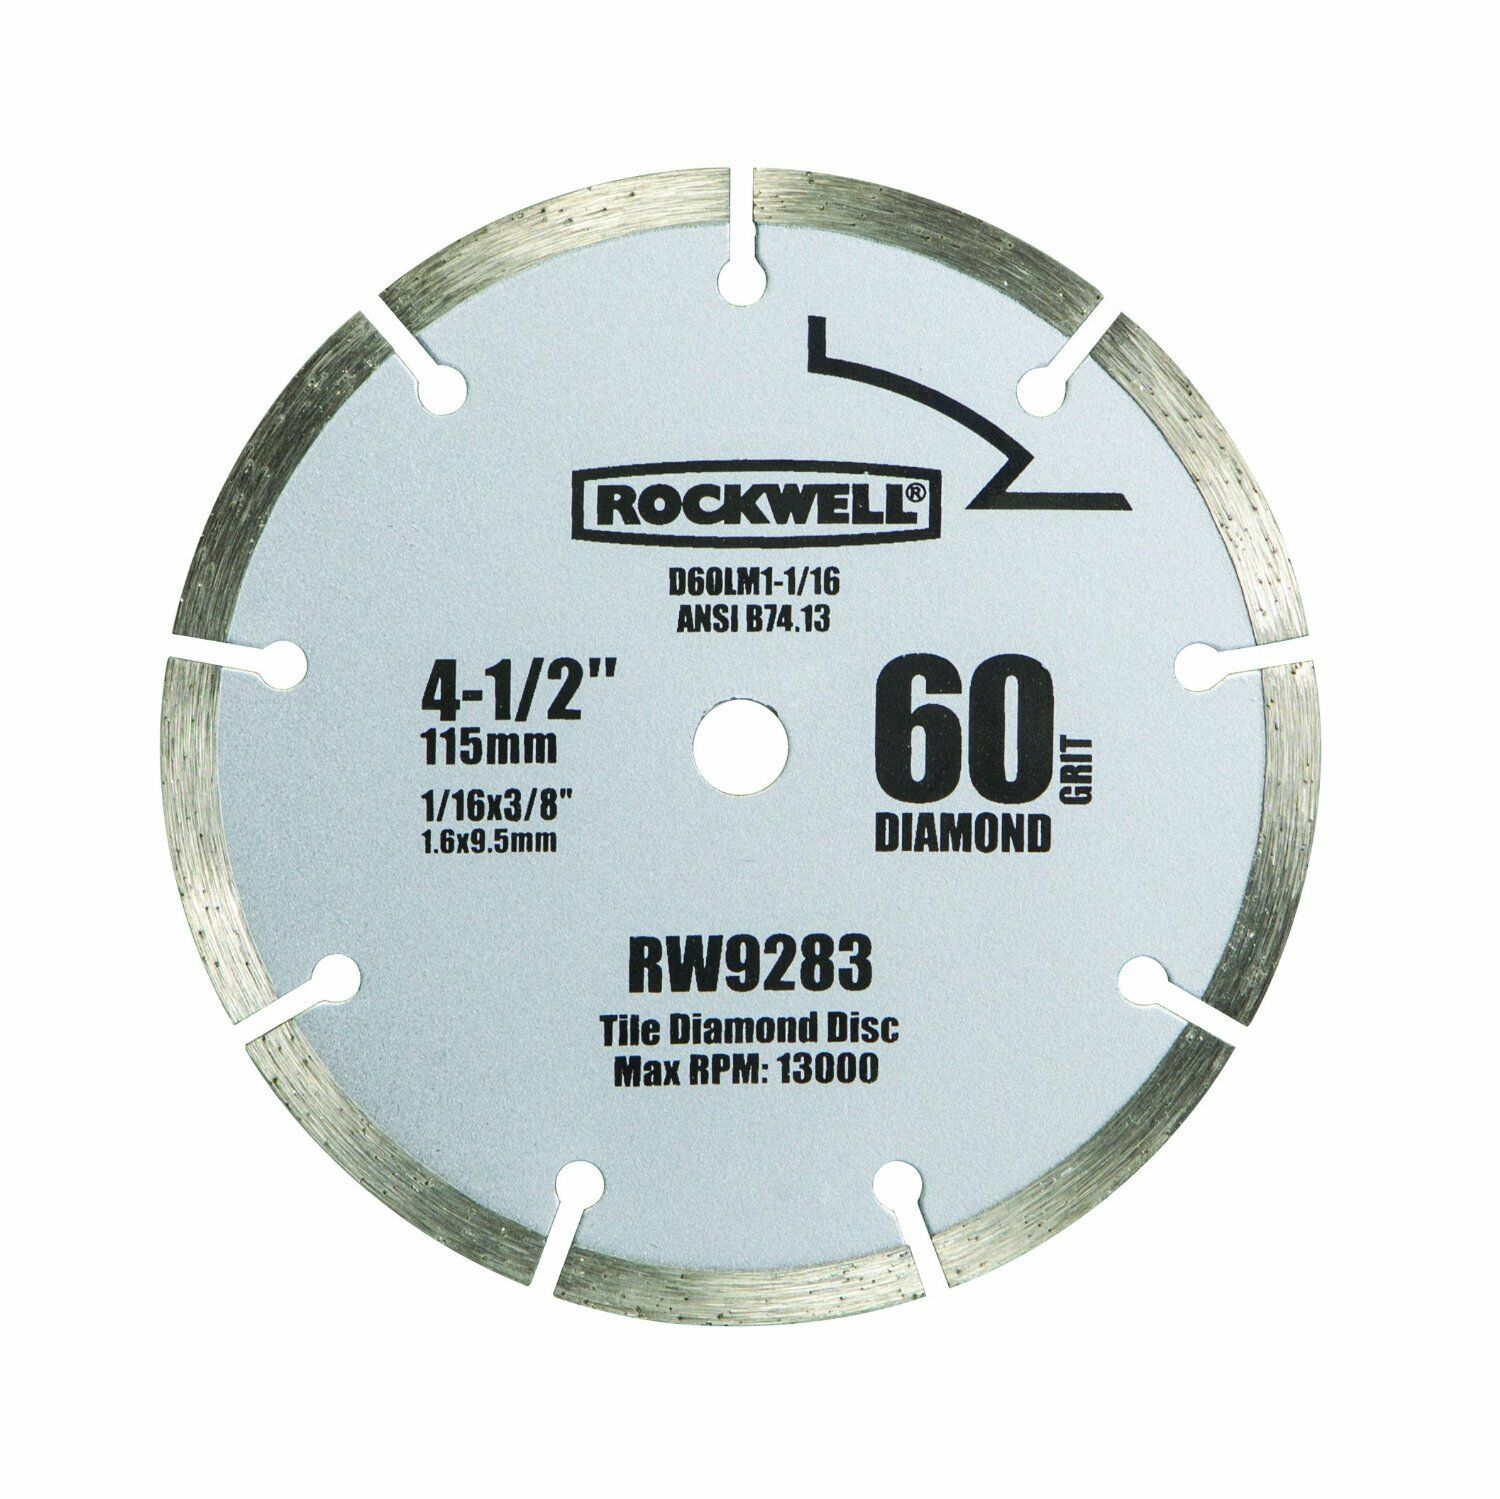 Rockwell Rw9283 4 1/2" Diamond 60-grit Compact Circular Saw Blade